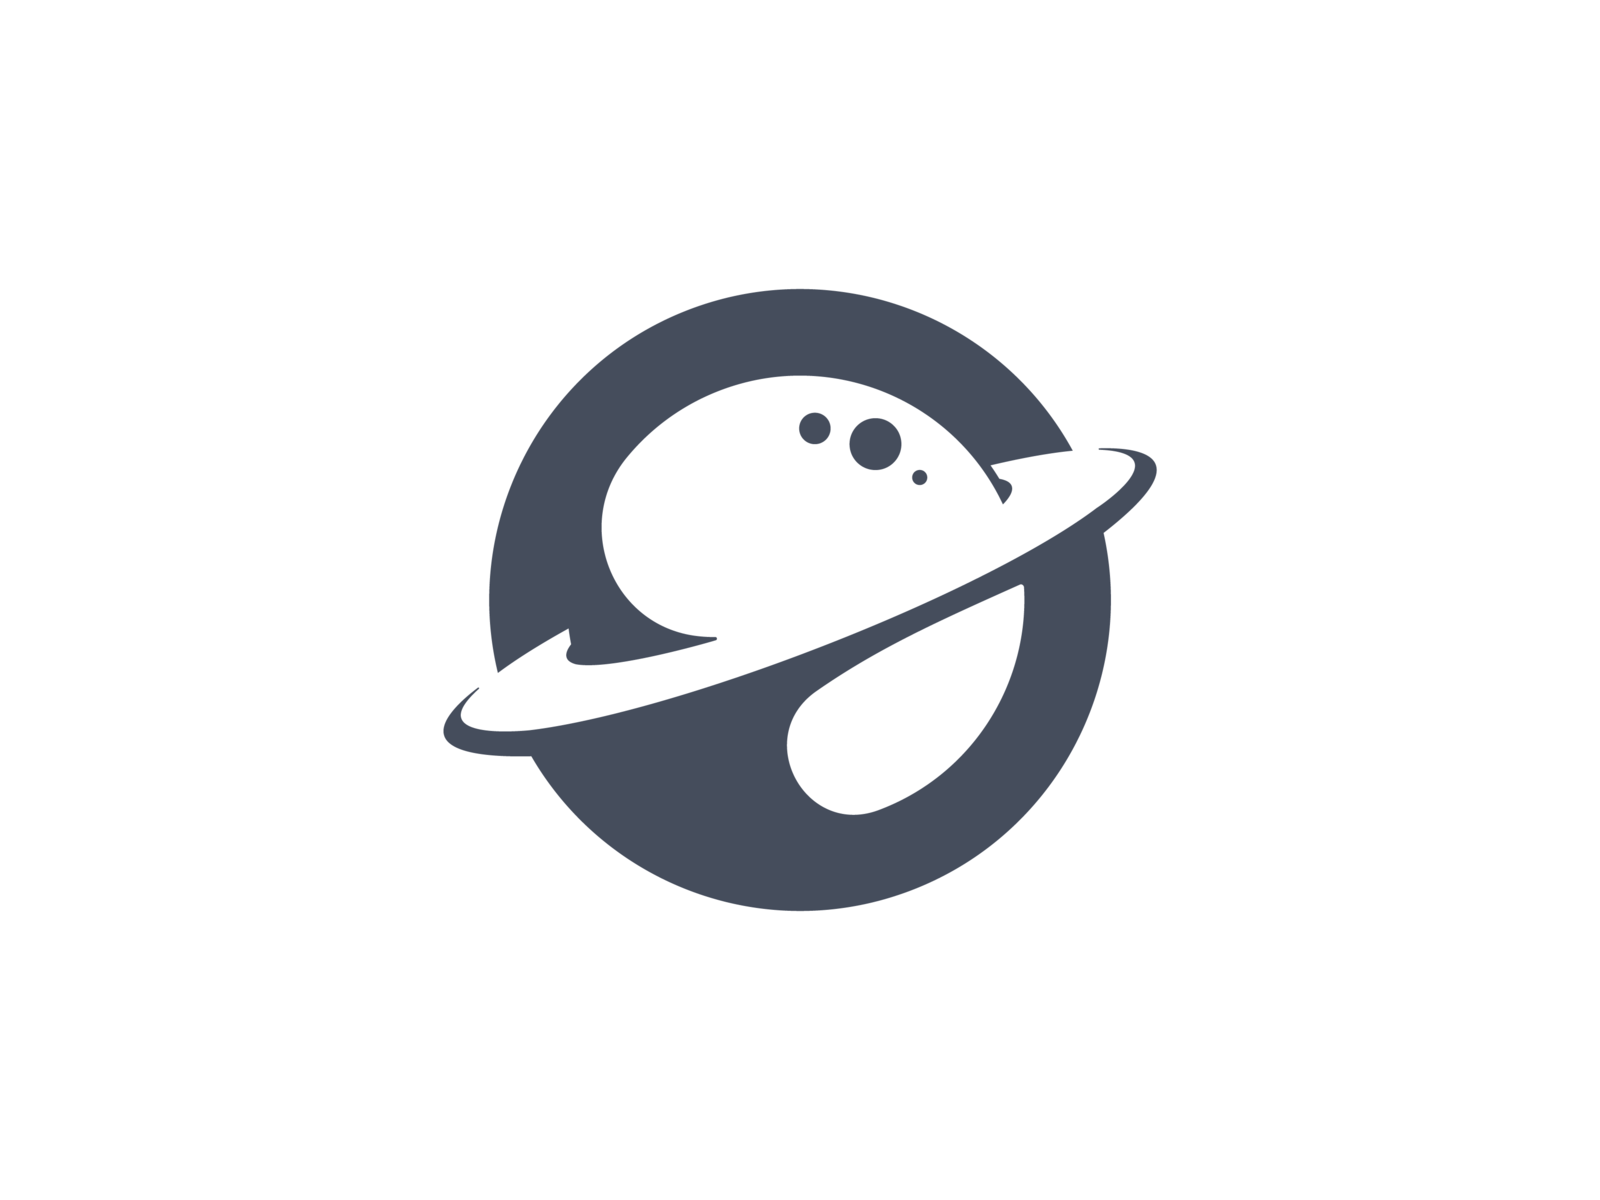 space simple logo by Hamzah_Umar on Dribbble